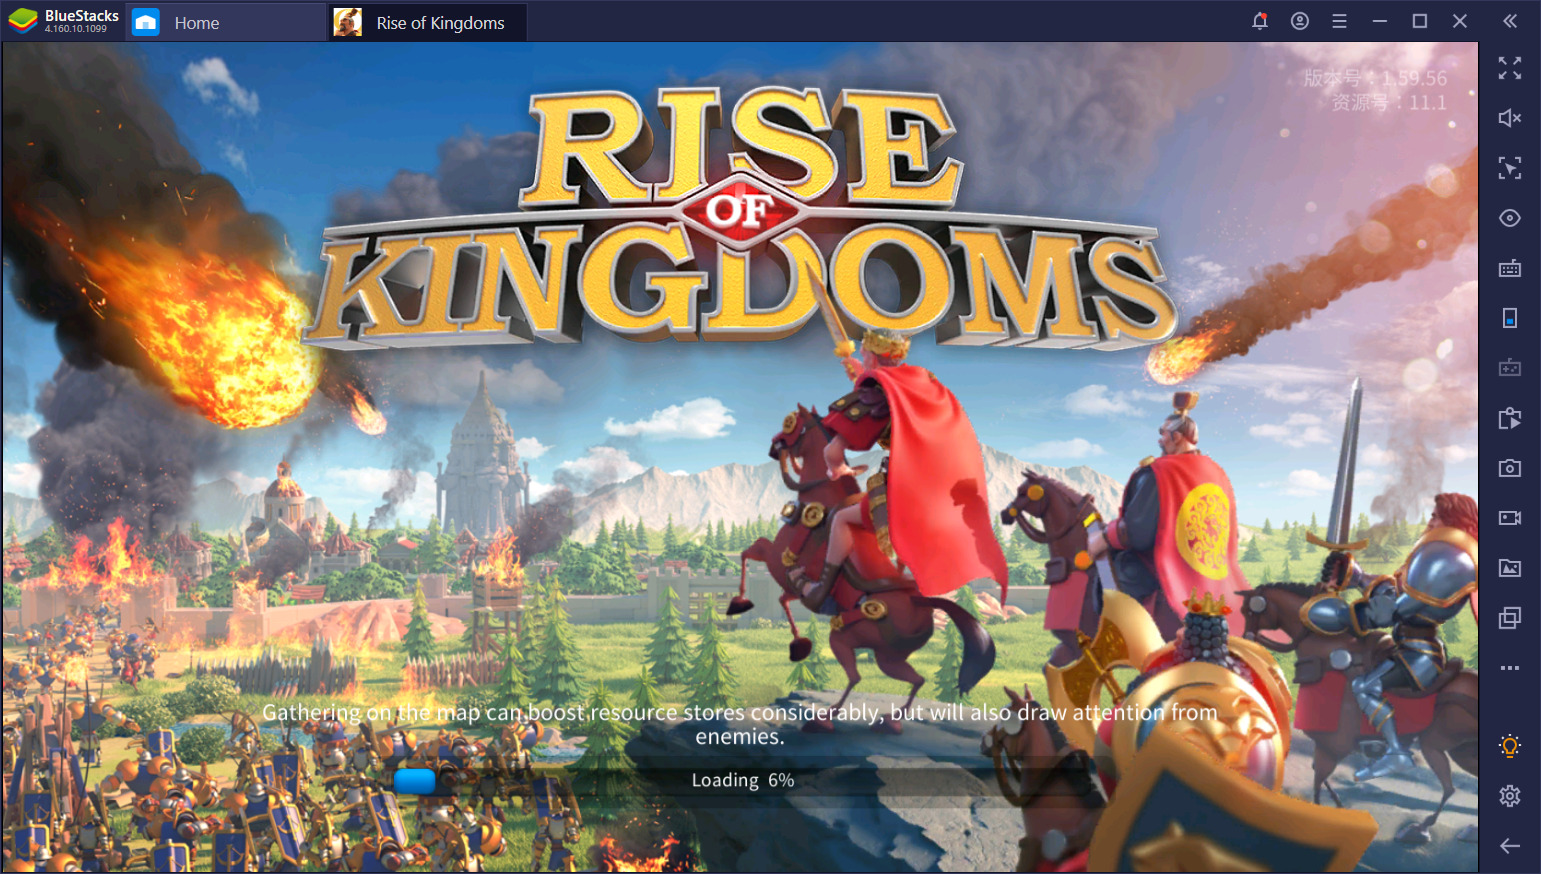 Kingdom games online, free